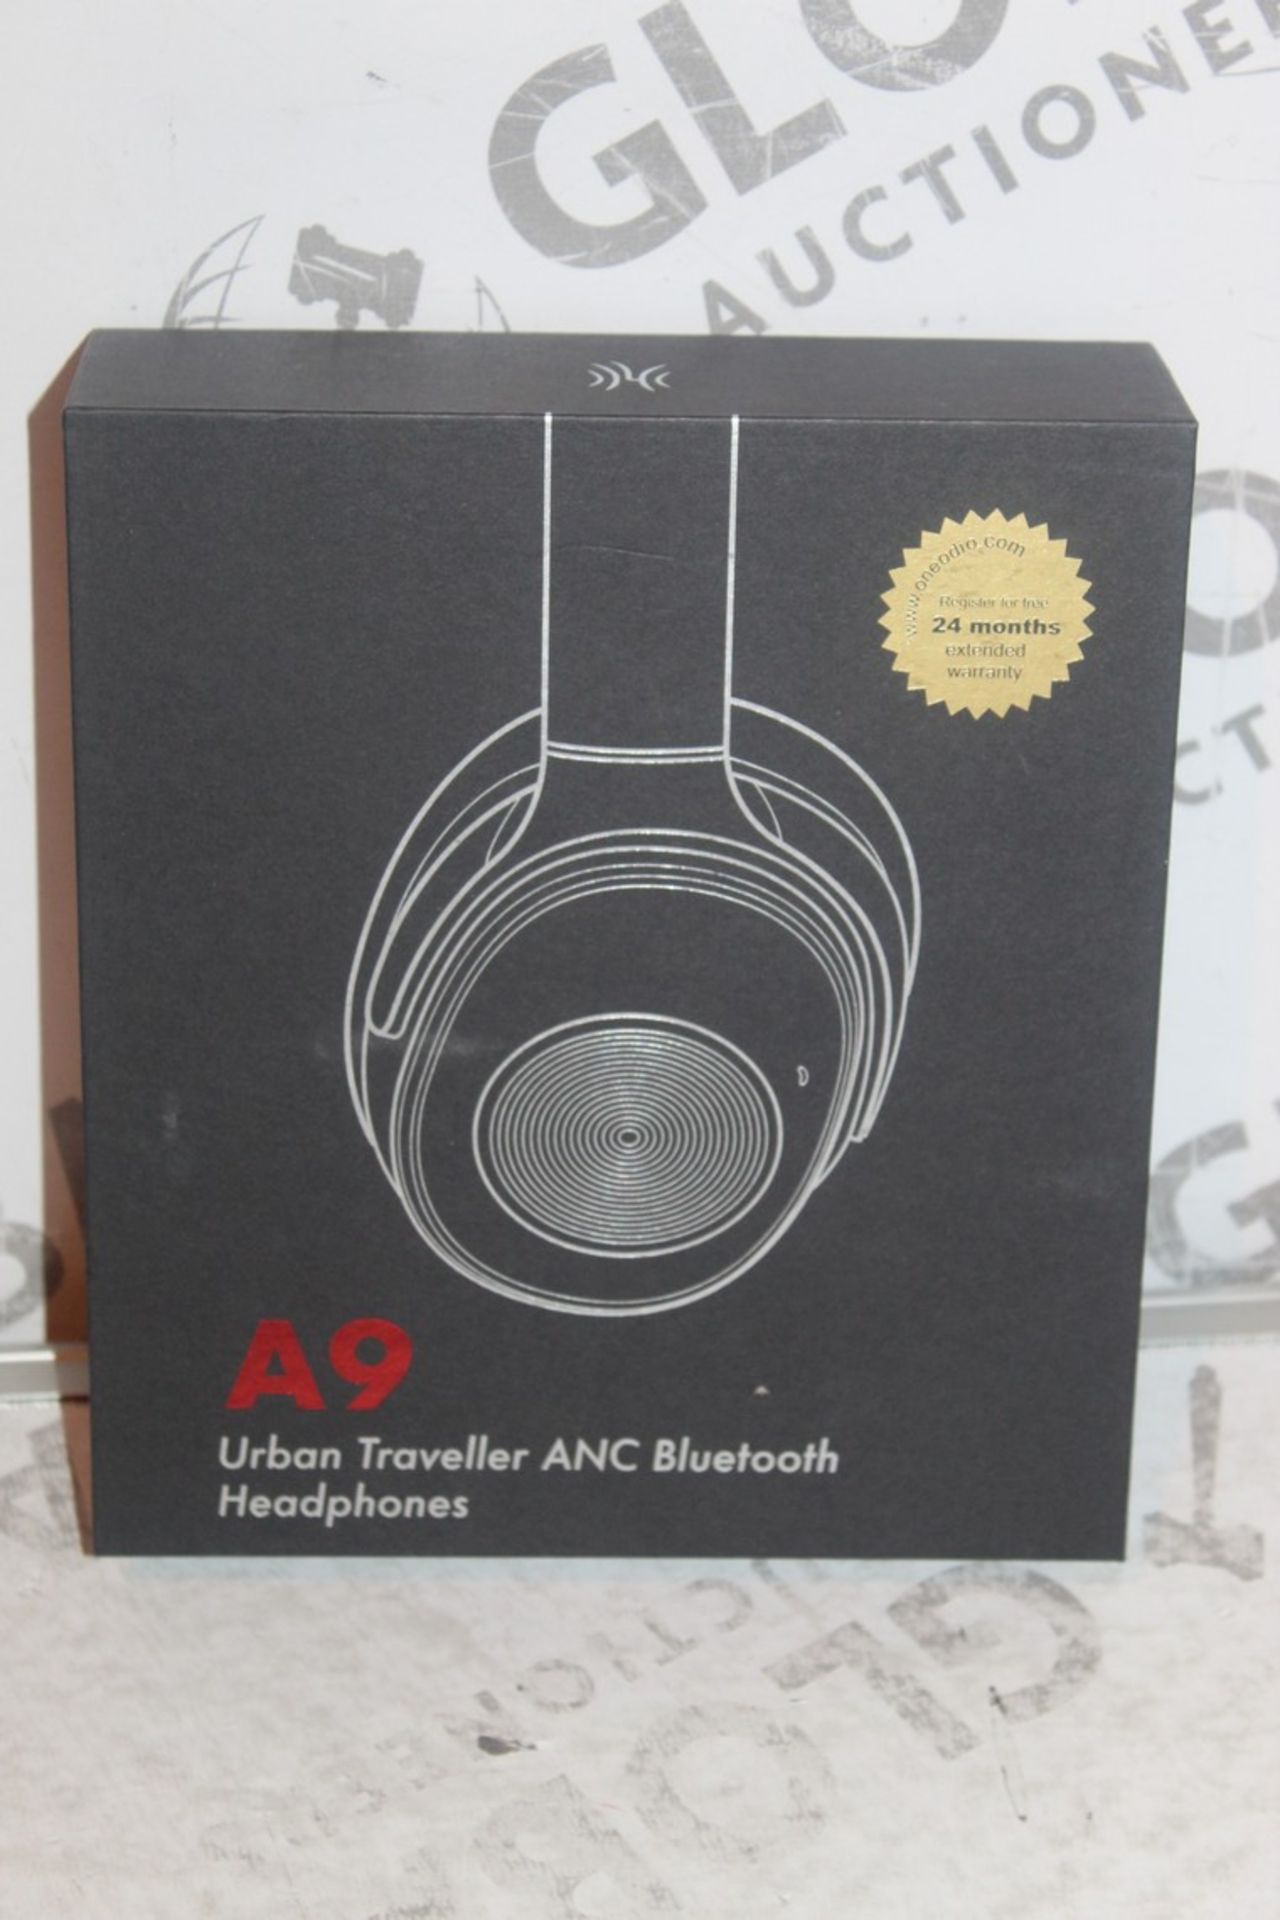 Boxed Pair A9 Urban Traveller ANC Bluetooth Headphones, RRP£55.00